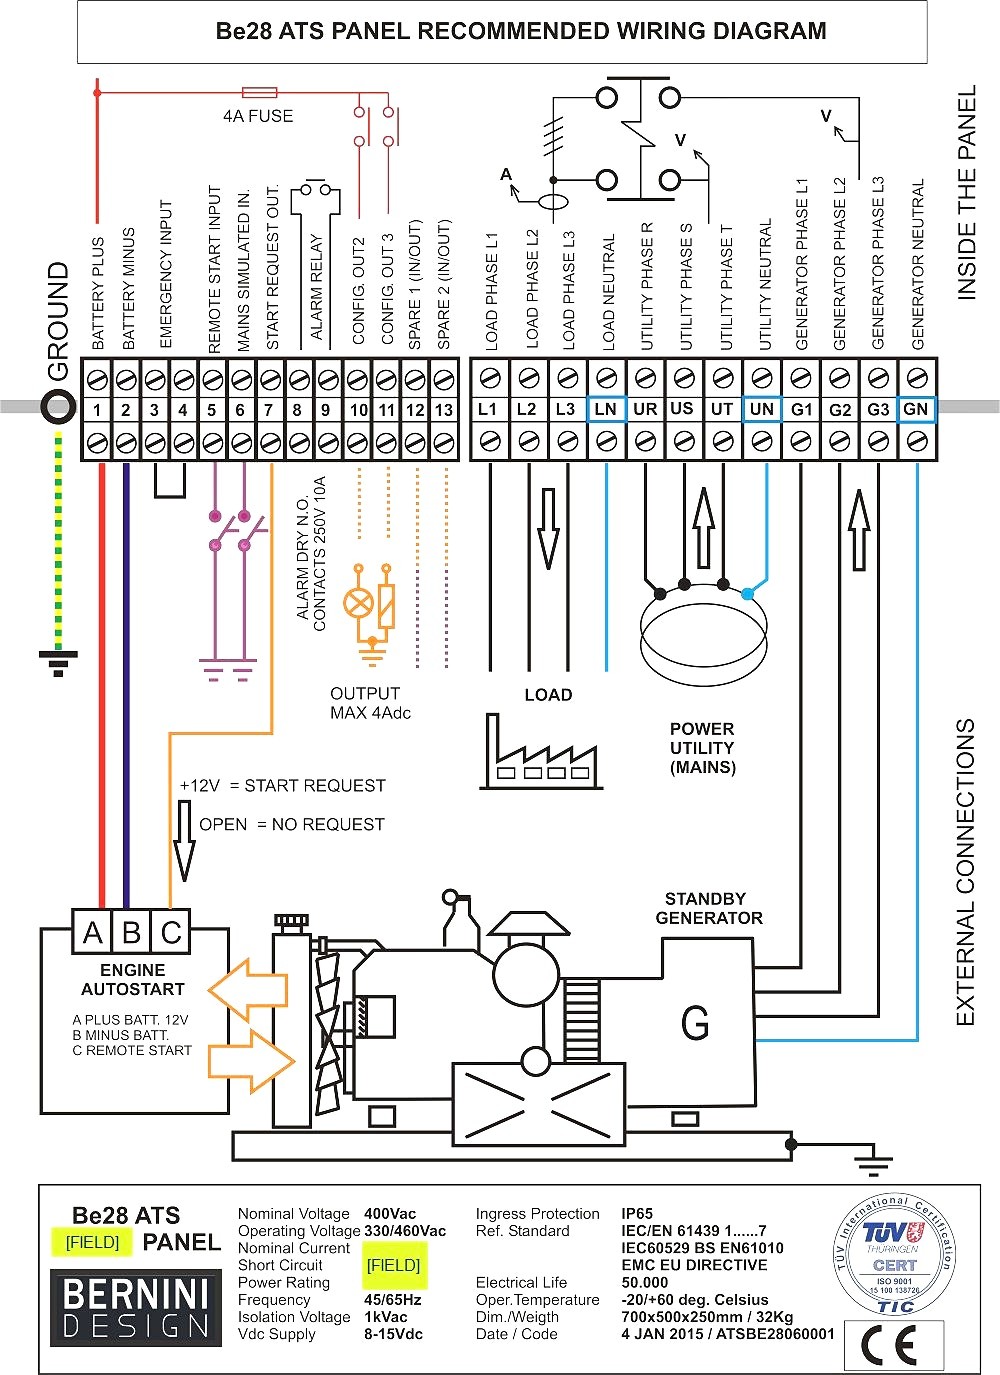 generac ats wiring diagram introduction to electrical wiring rh jillkamil generac automatic transfer switch wiring